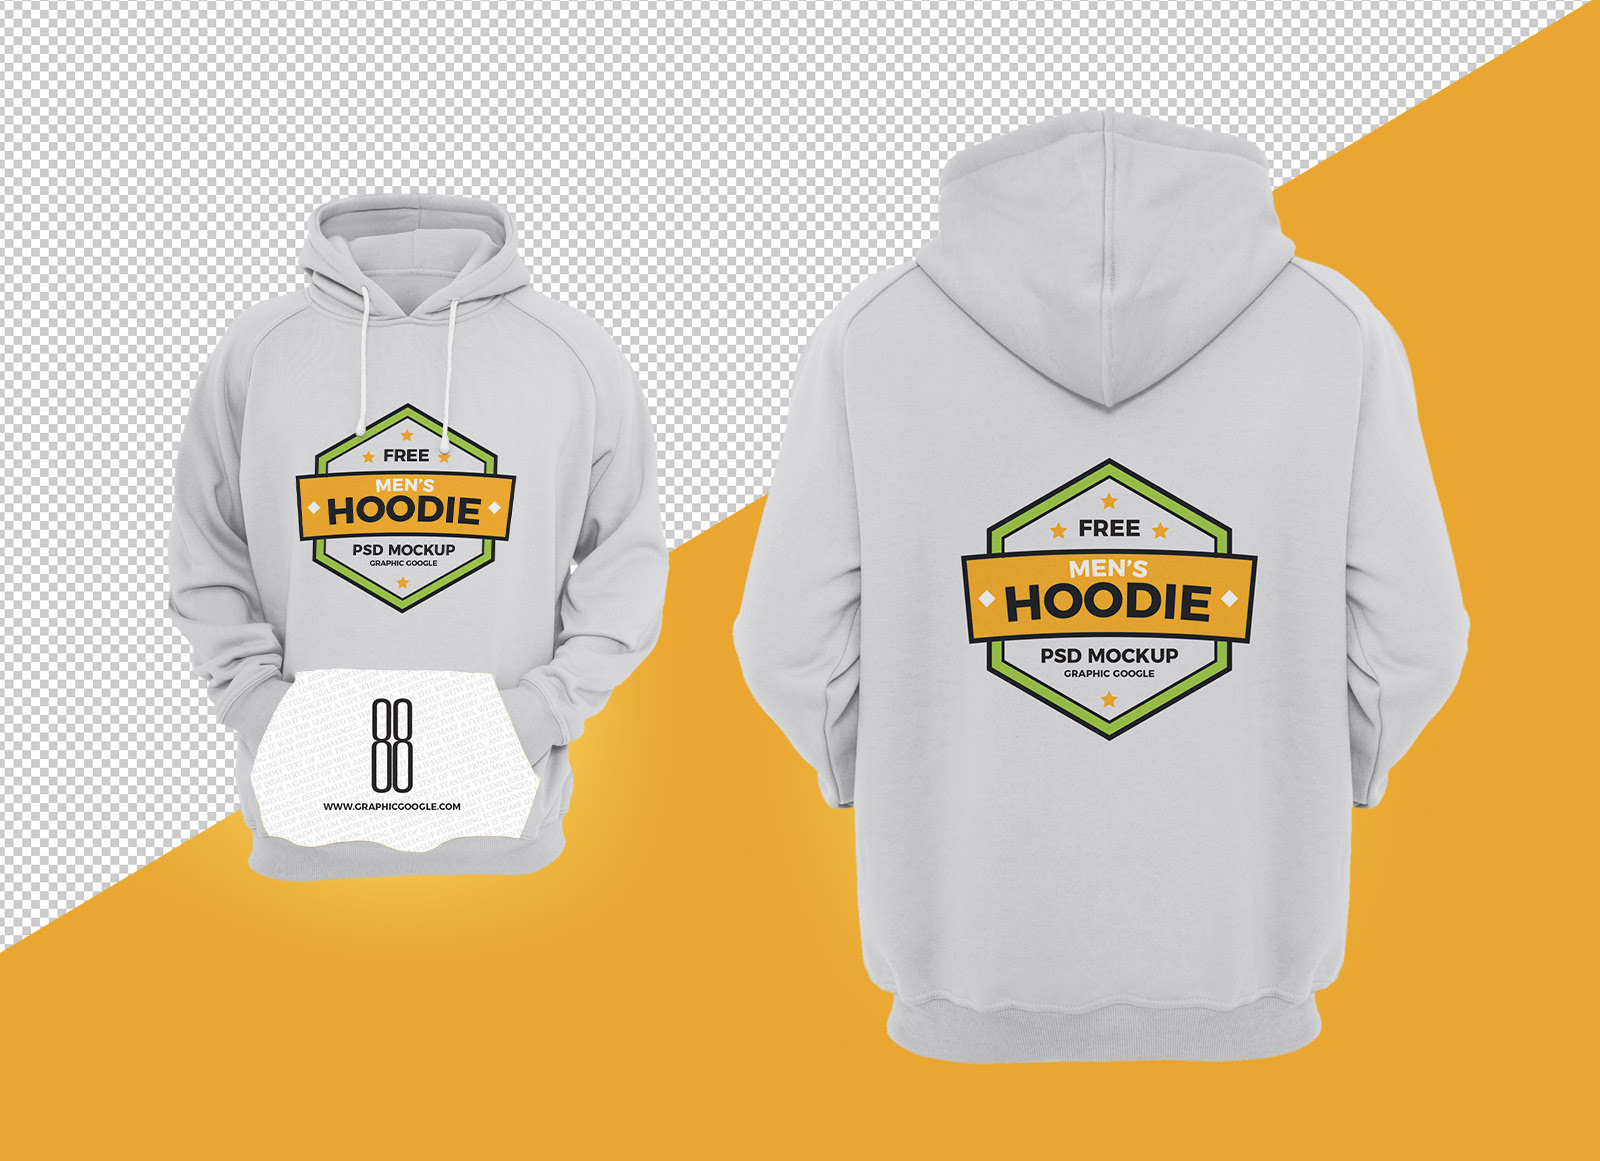 Download Free Men's Hoodie T-shirt Mockup PSD File - Good Mockups